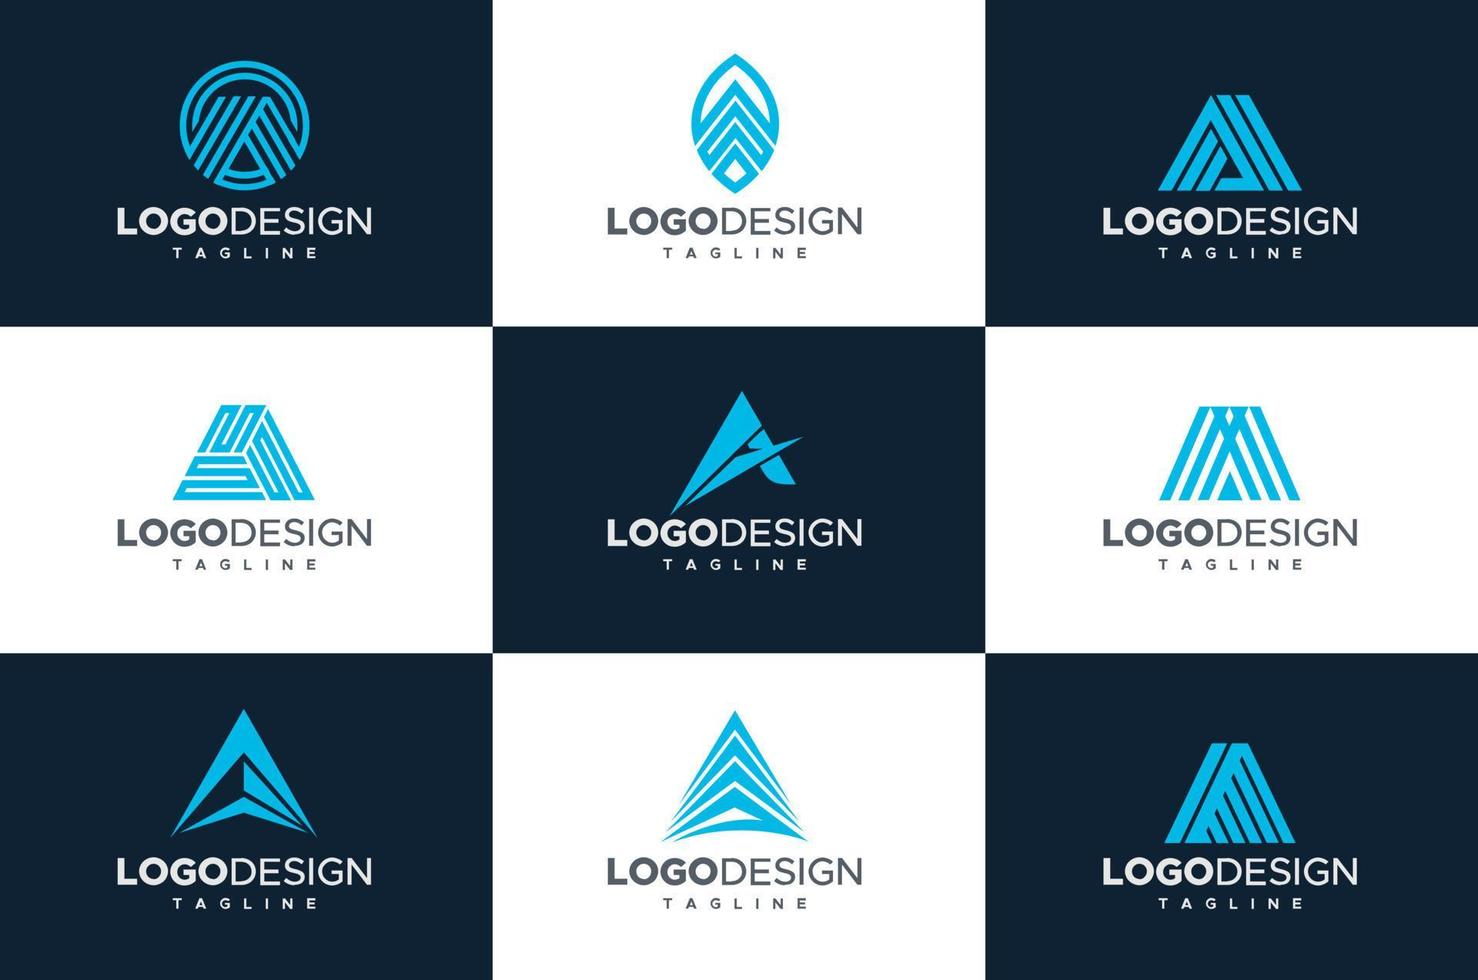 lettermark un' logo design. moderno un' logo design. un' logo design. tecnologia logo vettore